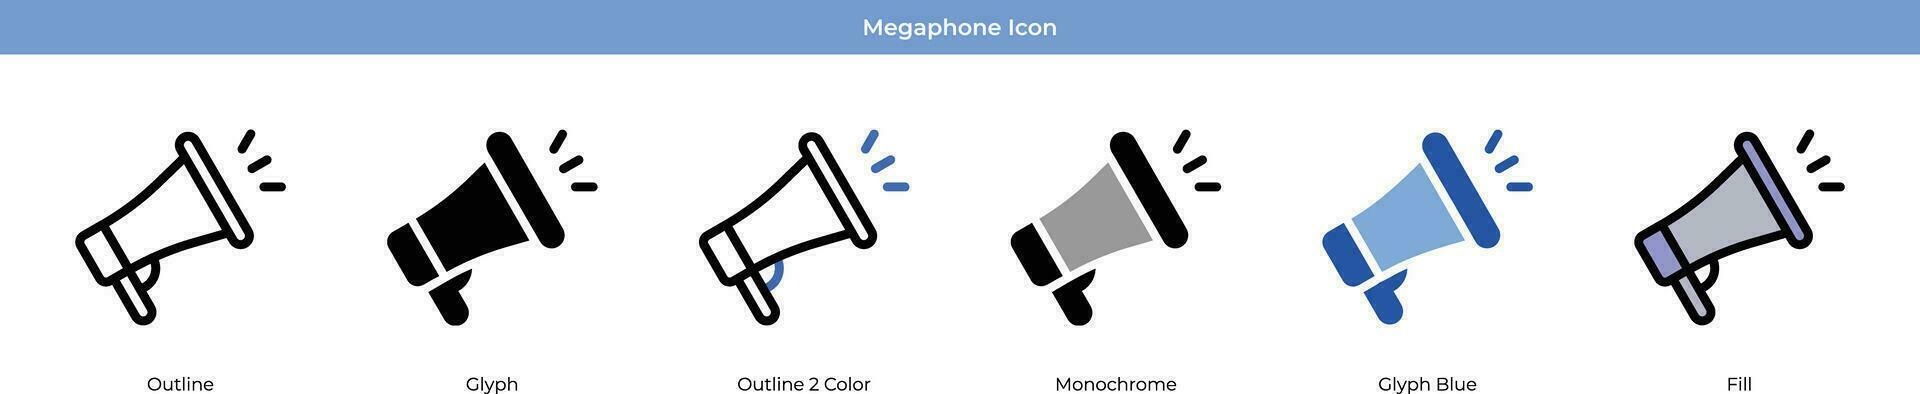 Megaphone New year Icon Set Vector